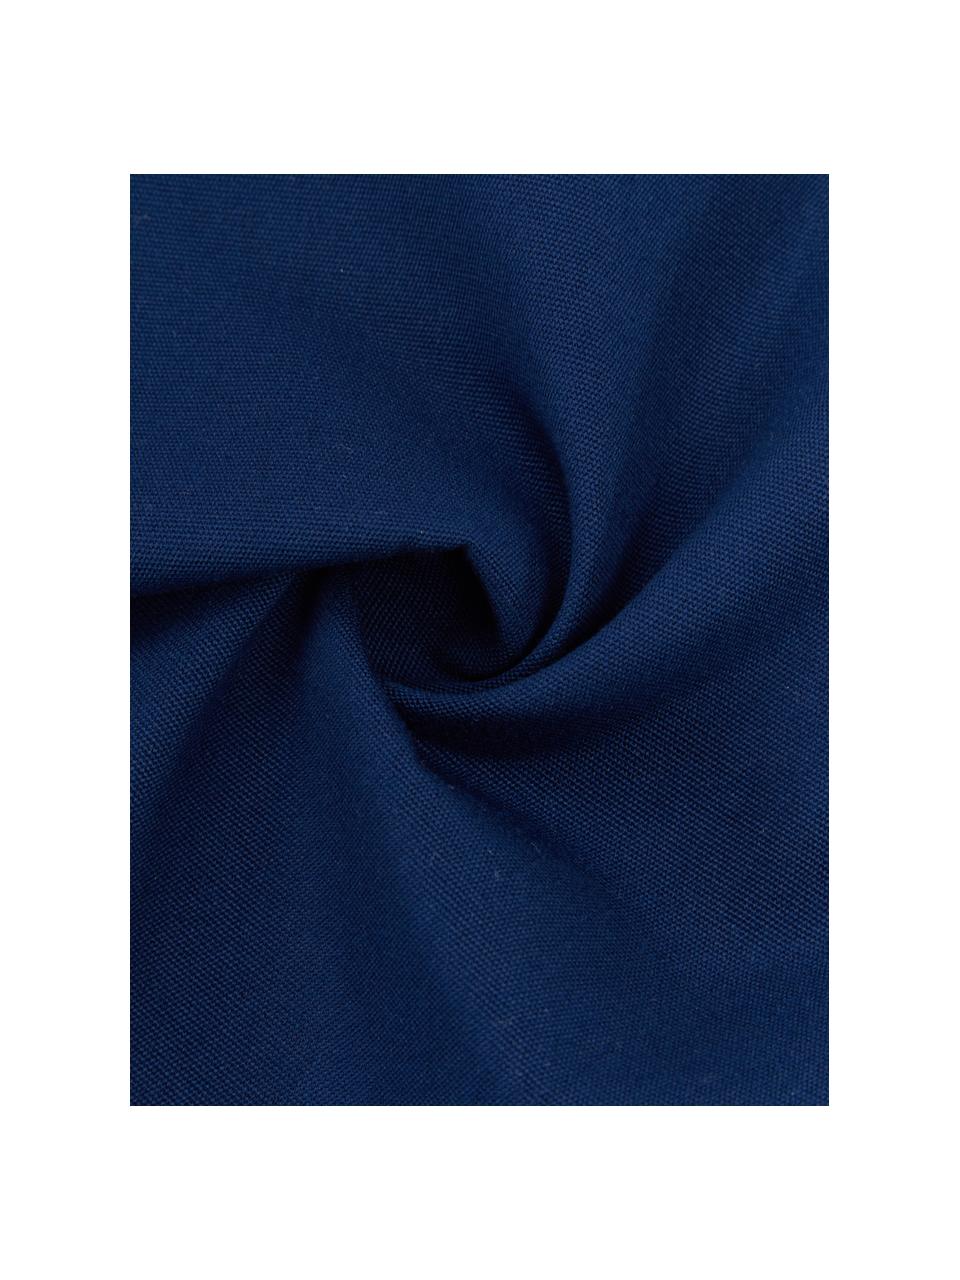 Outdoor kussenhoes Blopp in donkerblauw, Dralon (100% polyacryl), Donkerblauw, B 30 x L 47 cm